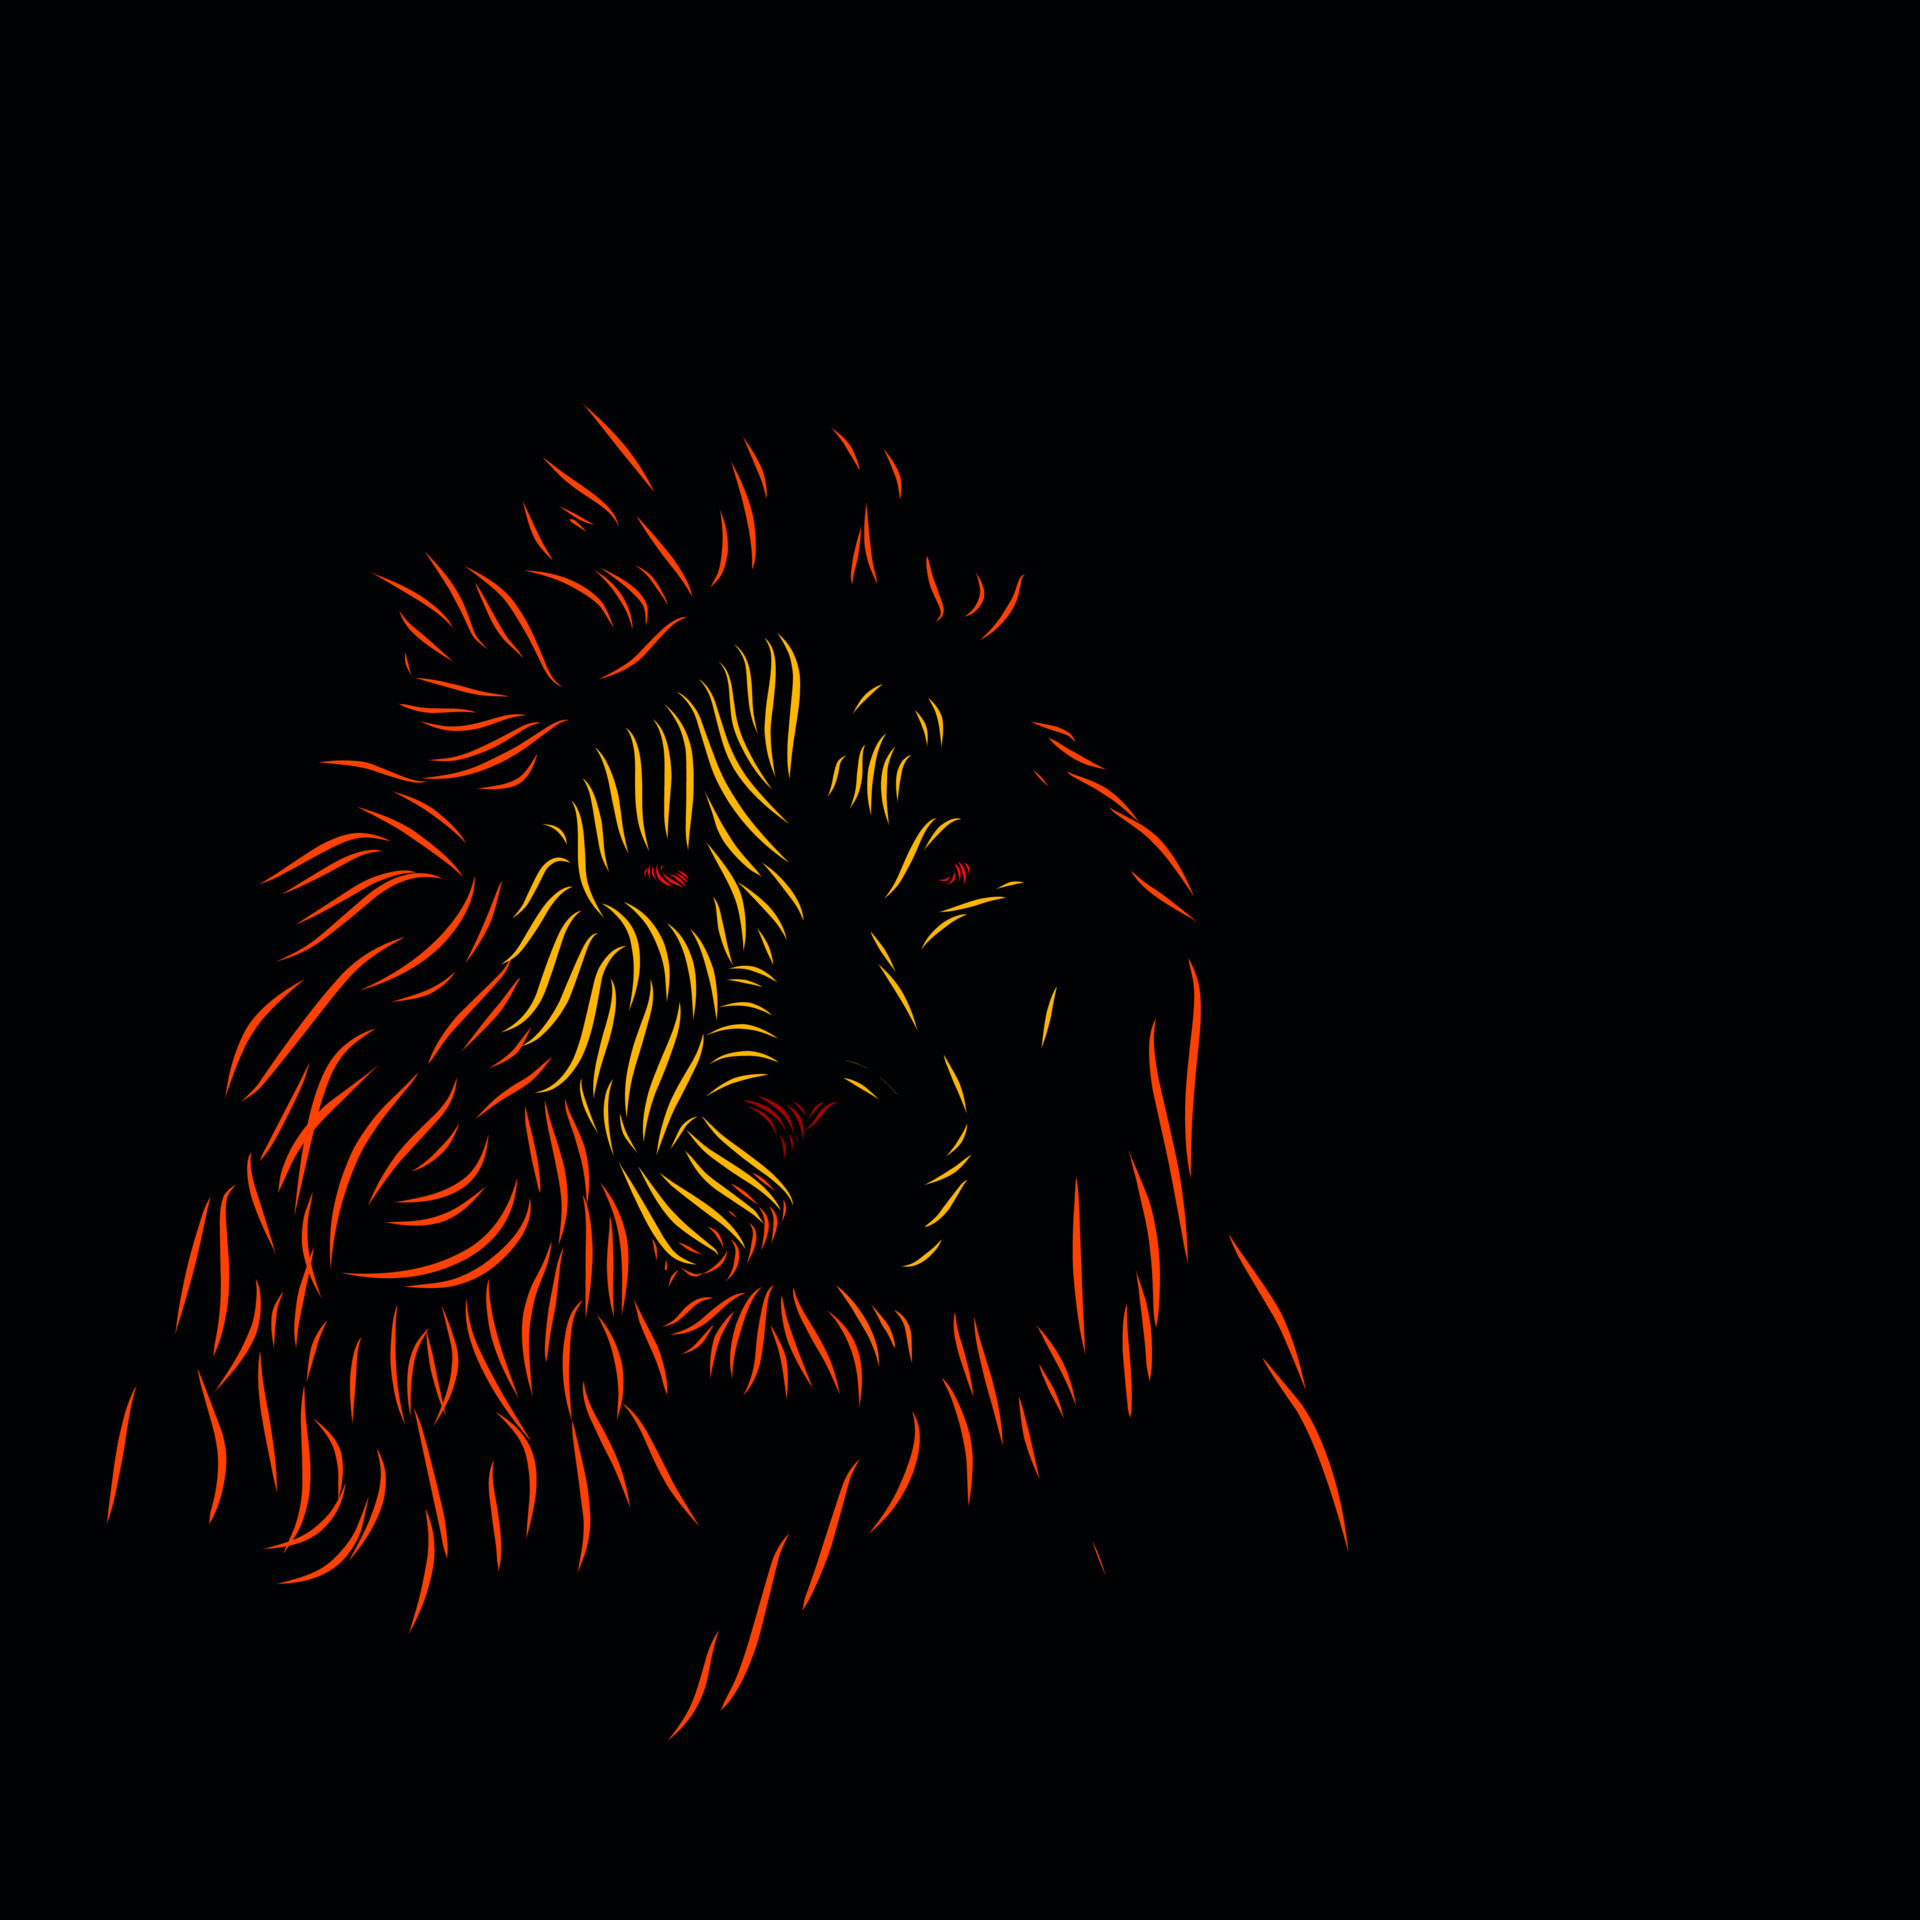 lion king silhouette